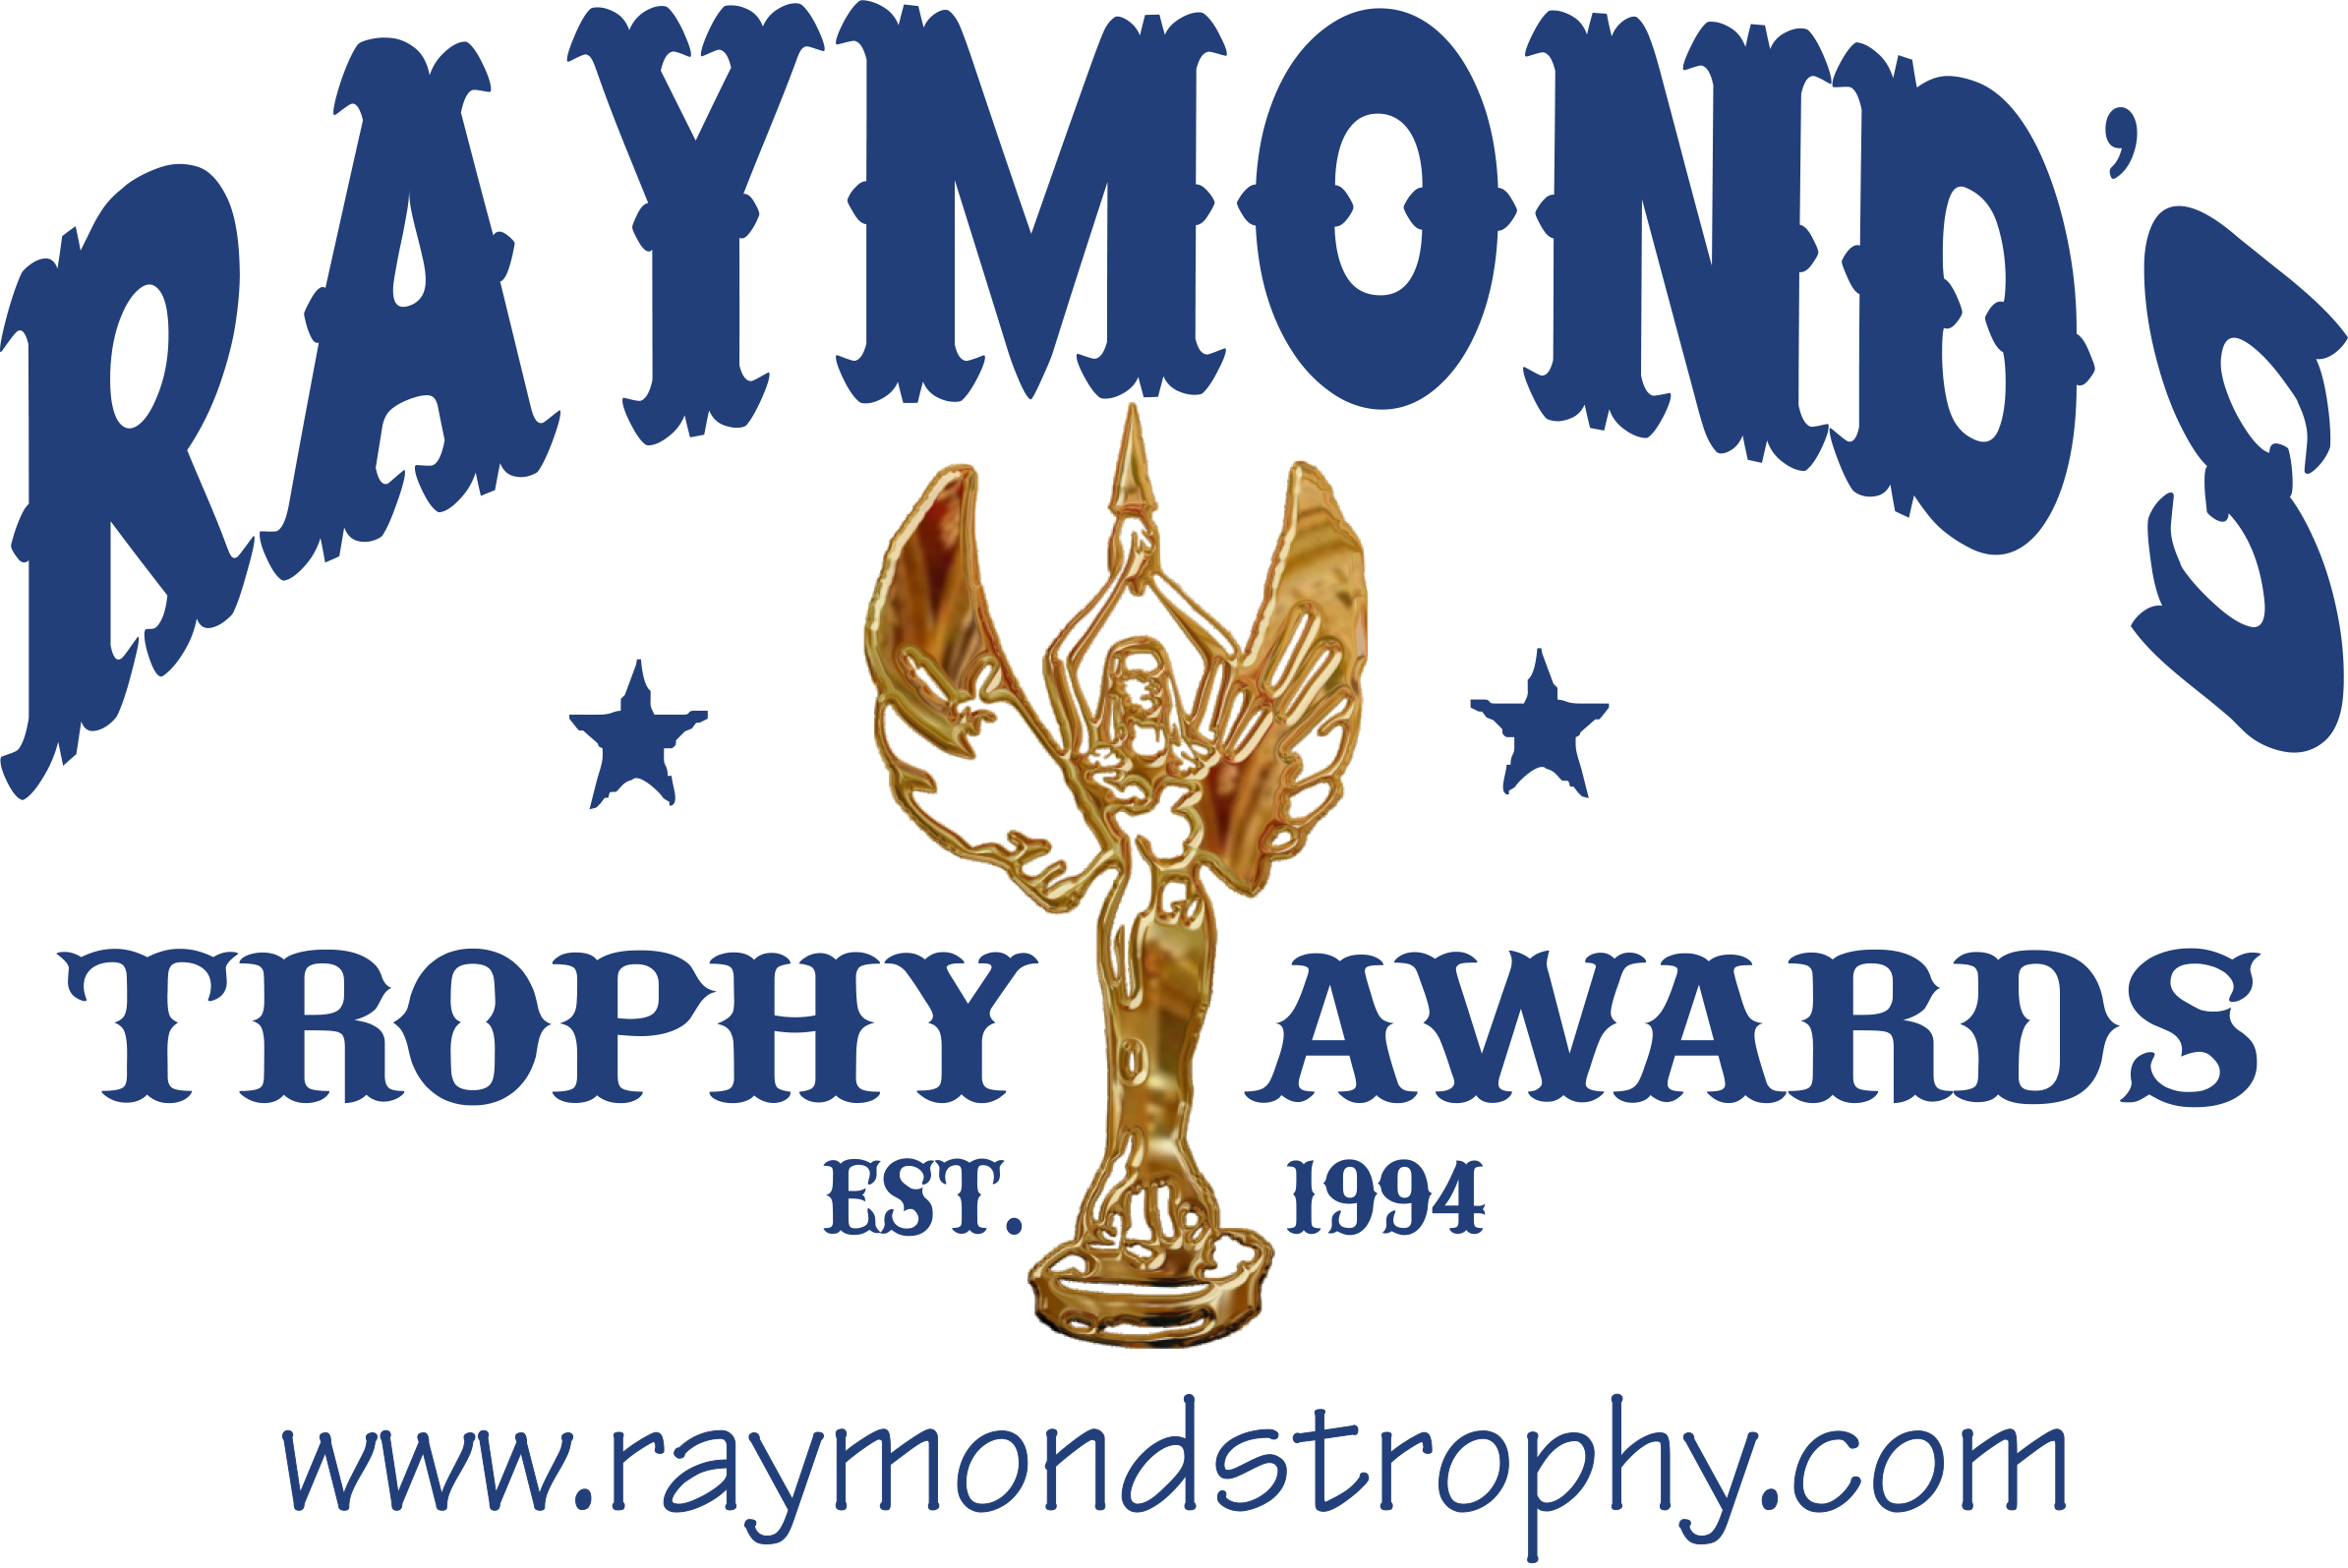 Raymond's Trophy & Awards